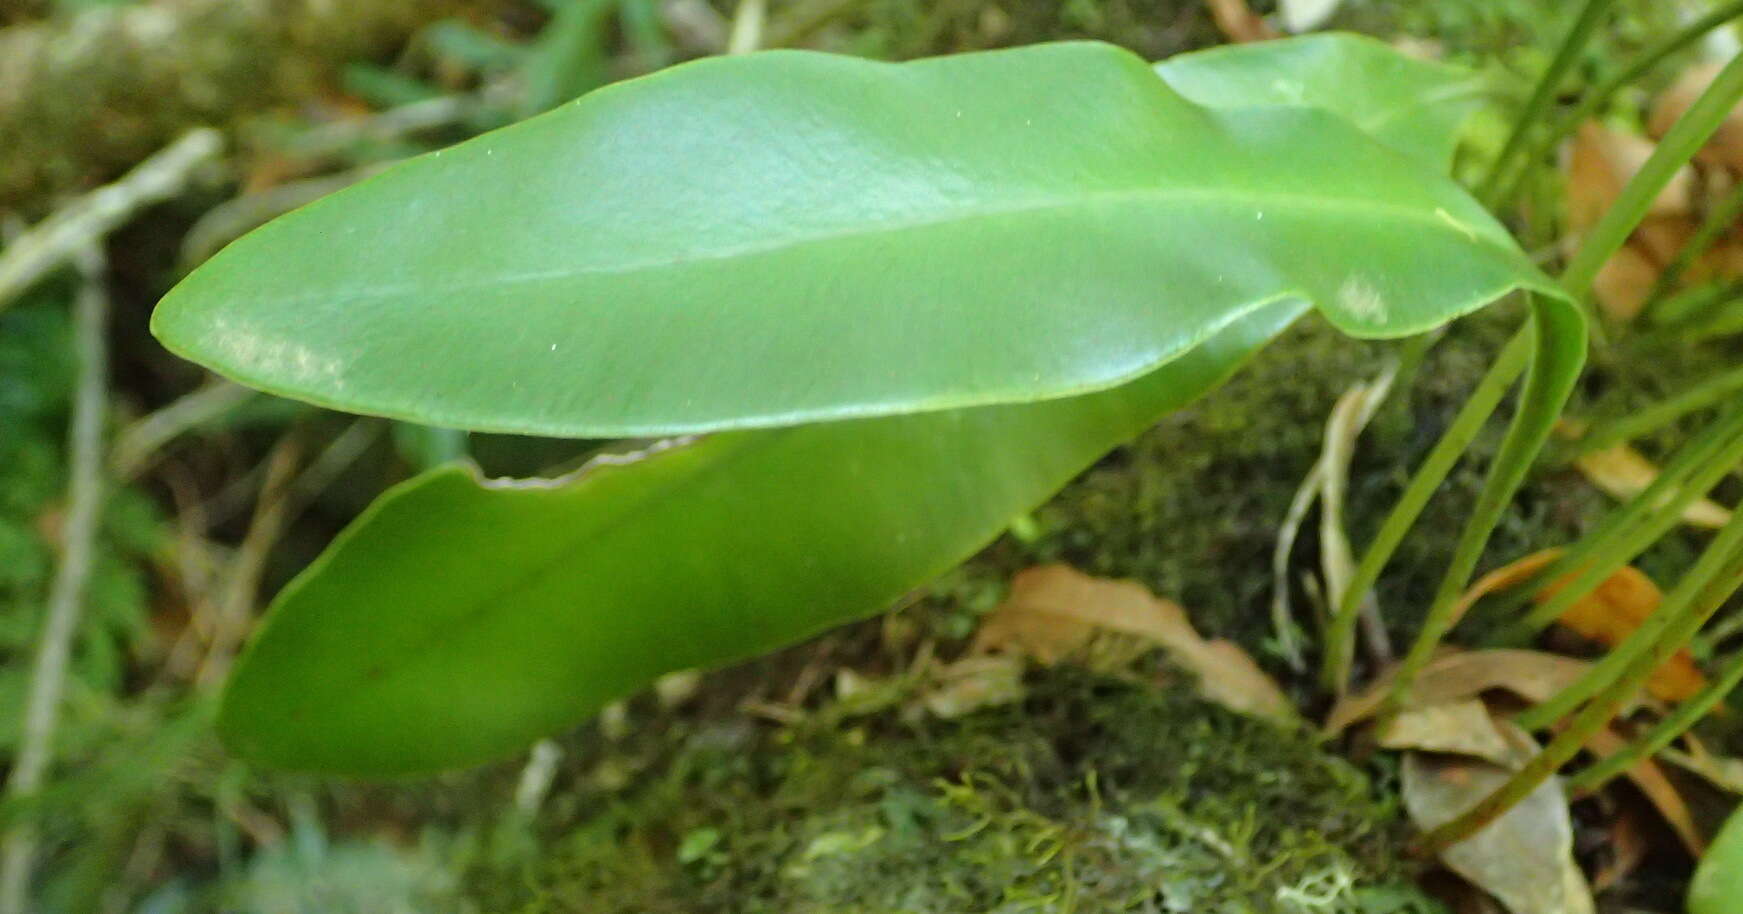 Image of Elaphoglossum acrostichoides (Hook. & Grev.) Schelpe